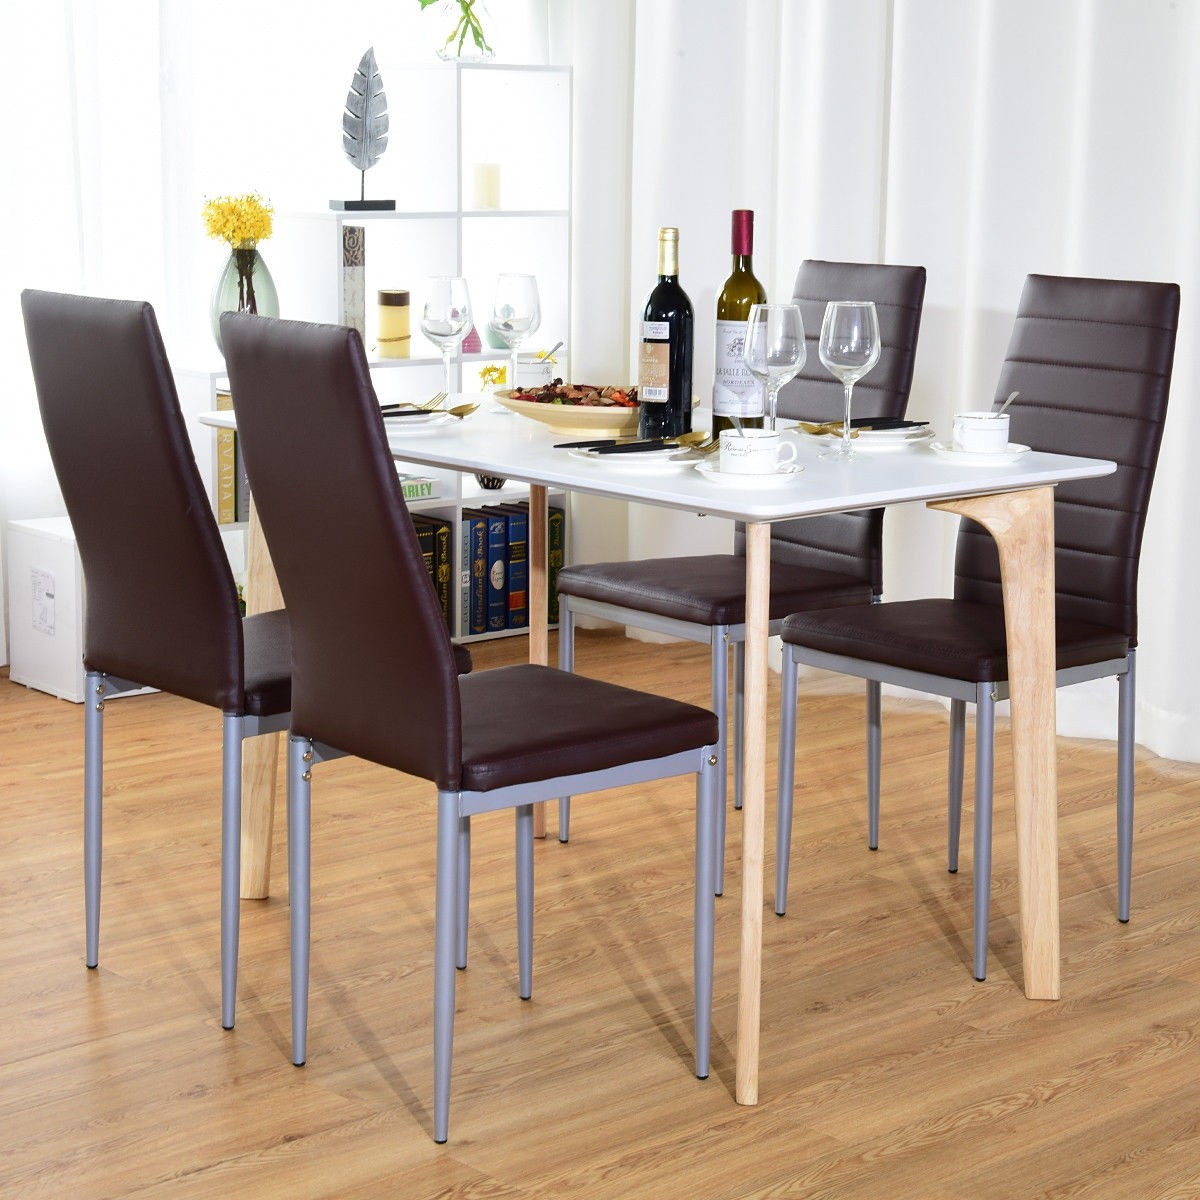 4 Pcs PVC Leather Elegant Design Dining Side Chairs